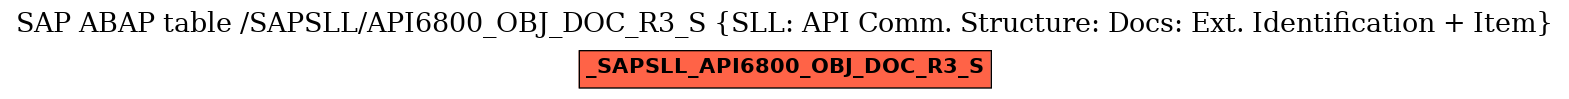 E-R Diagram for table /SAPSLL/API6800_OBJ_DOC_R3_S (SLL: API Comm. Structure: Docs: Ext. Identification + Item)